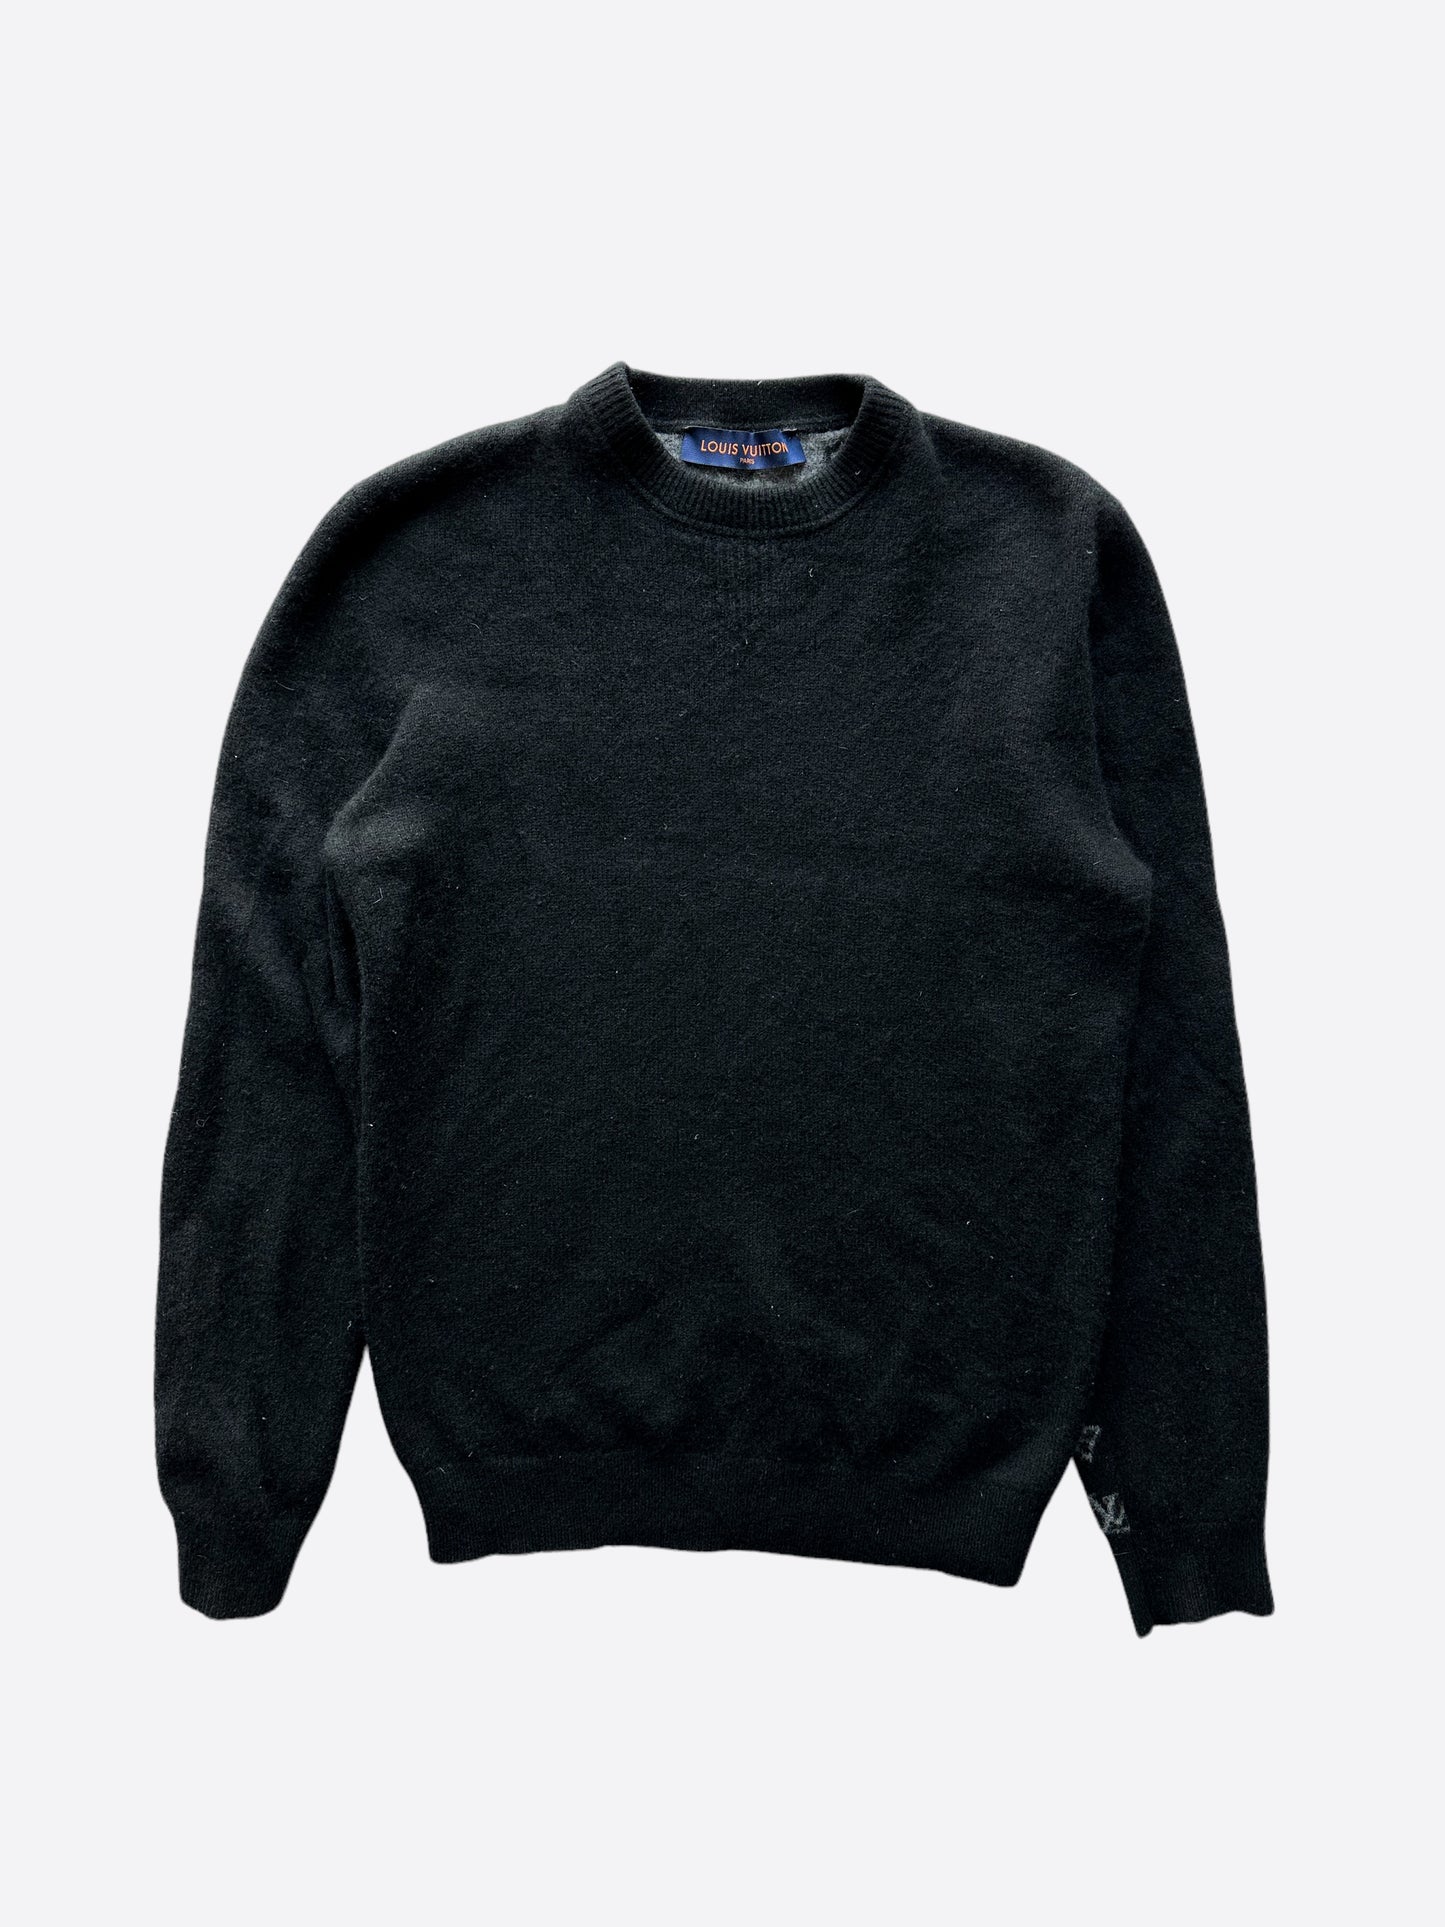 LOUIS VUITTON Knit Hat Cashmere 100% Monogram Black Gray Logo